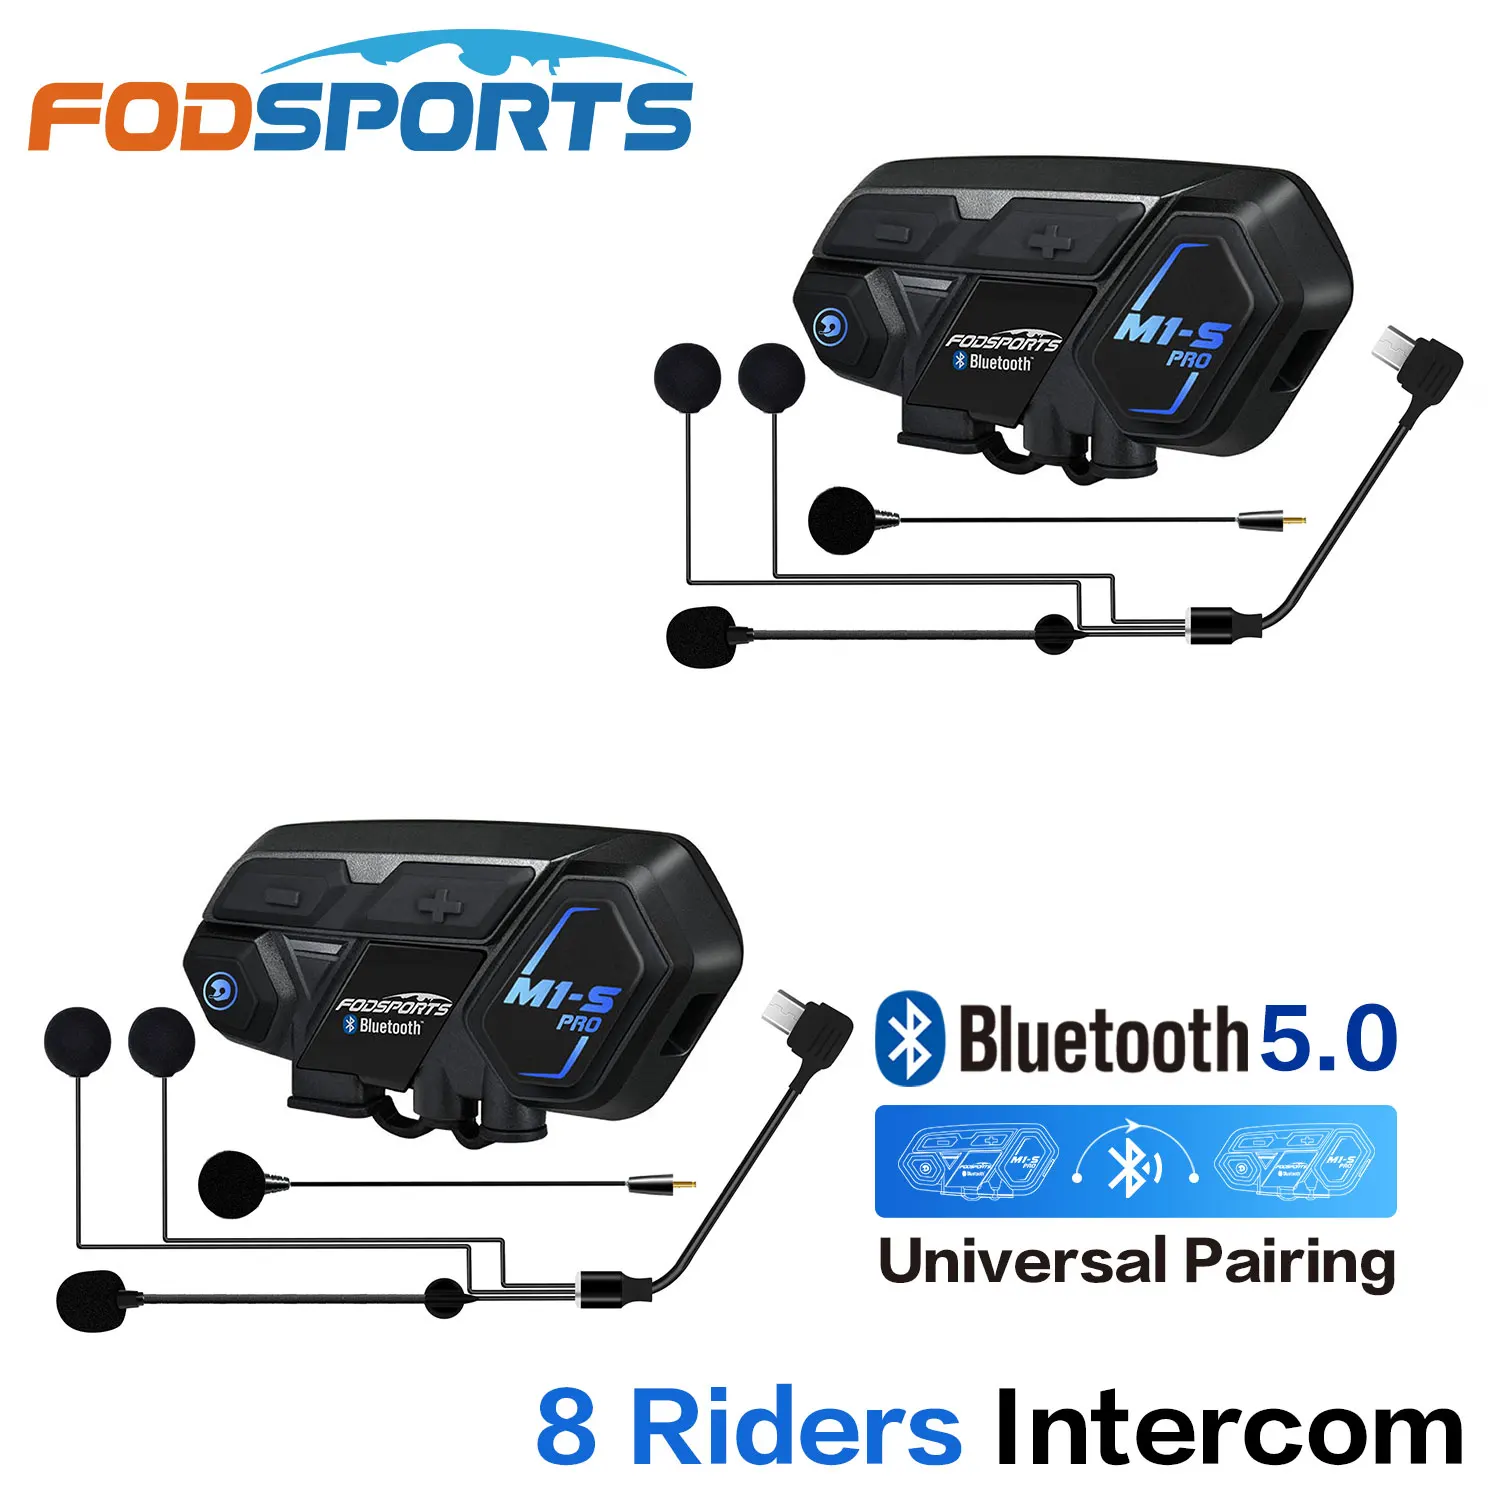 Fodsports Motorcycle Bluetooth Helmet Headset Intercom for 8 riders M1S Pro Waterproof Wireless intercomunicador Interphone MP3